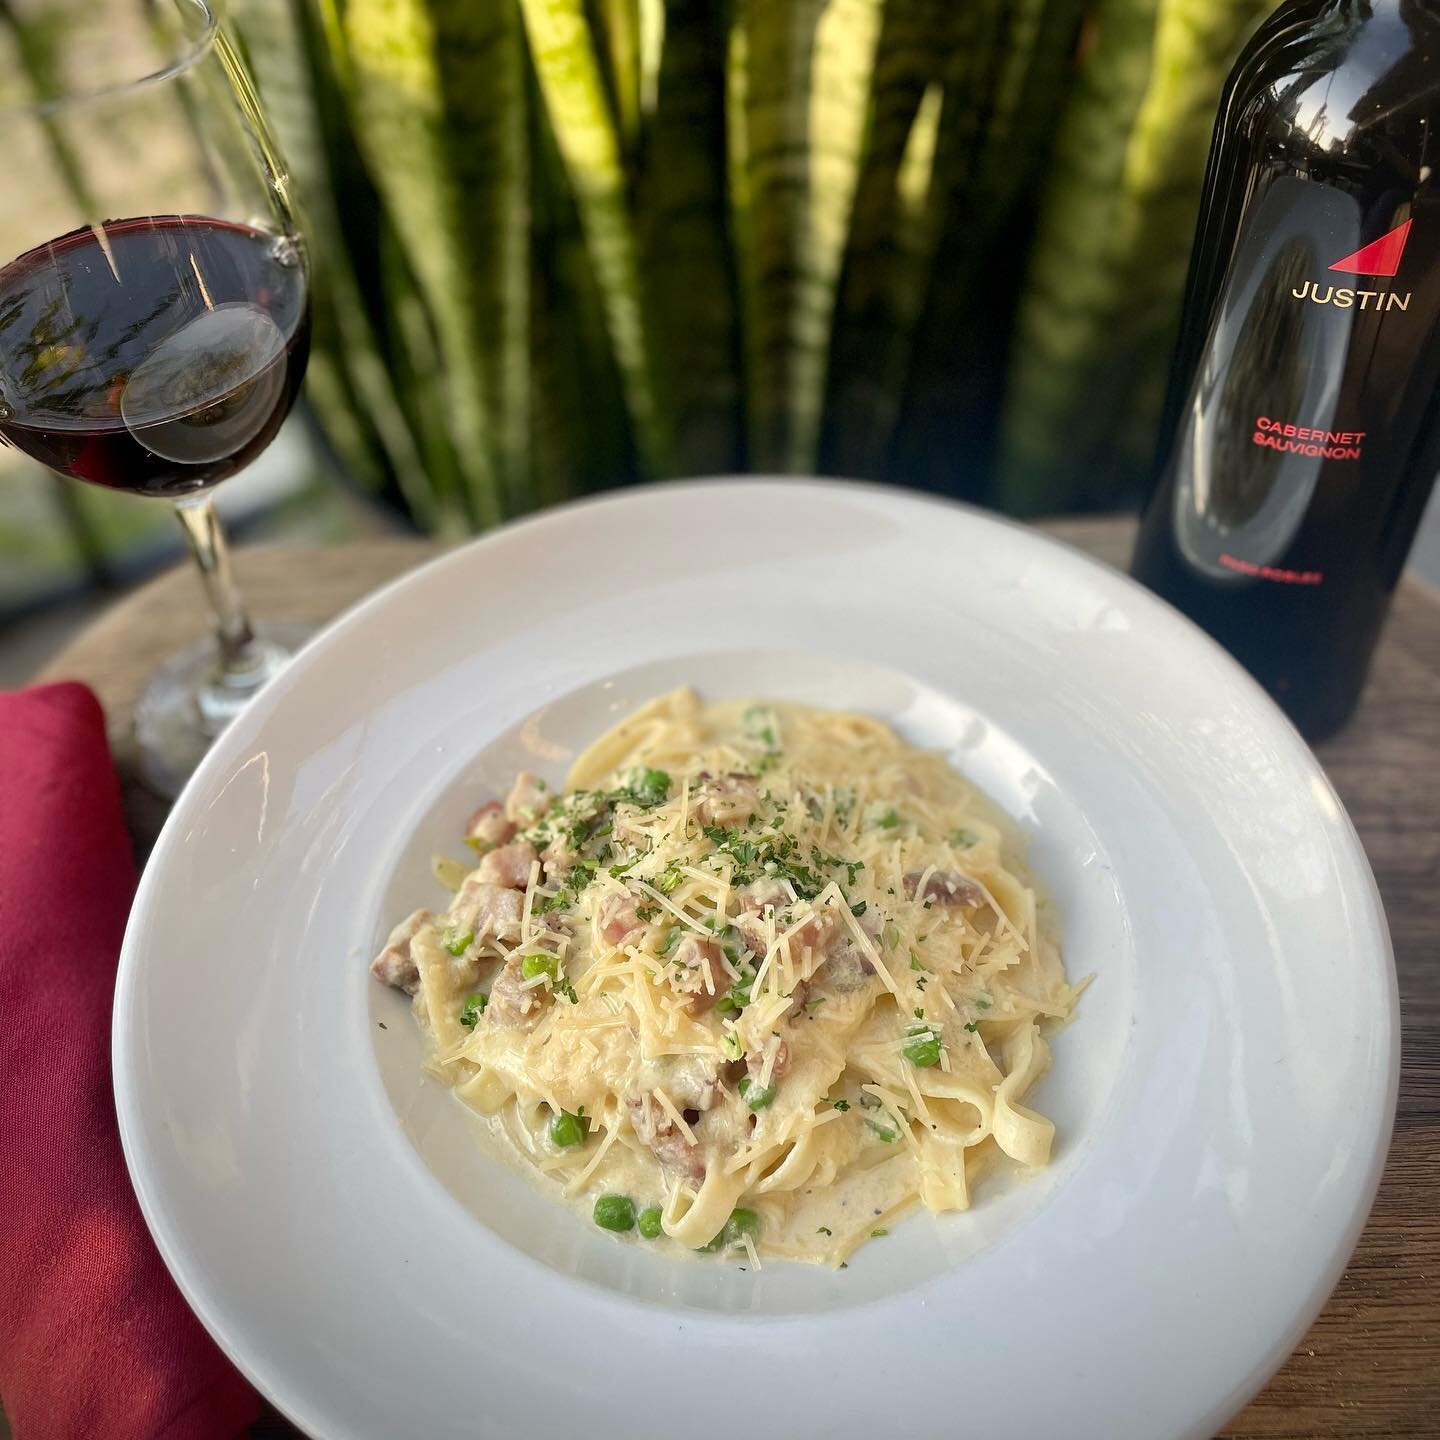 Join us tonight for dinner &amp; try our tasty Pasta  Carbonara. 🍽️ 
#happywednesday #winewednesday #dinner #pastacarbonara #fettuccinepasta #parmesancheese #pancetta #wine #justin #cabernetsauvignon